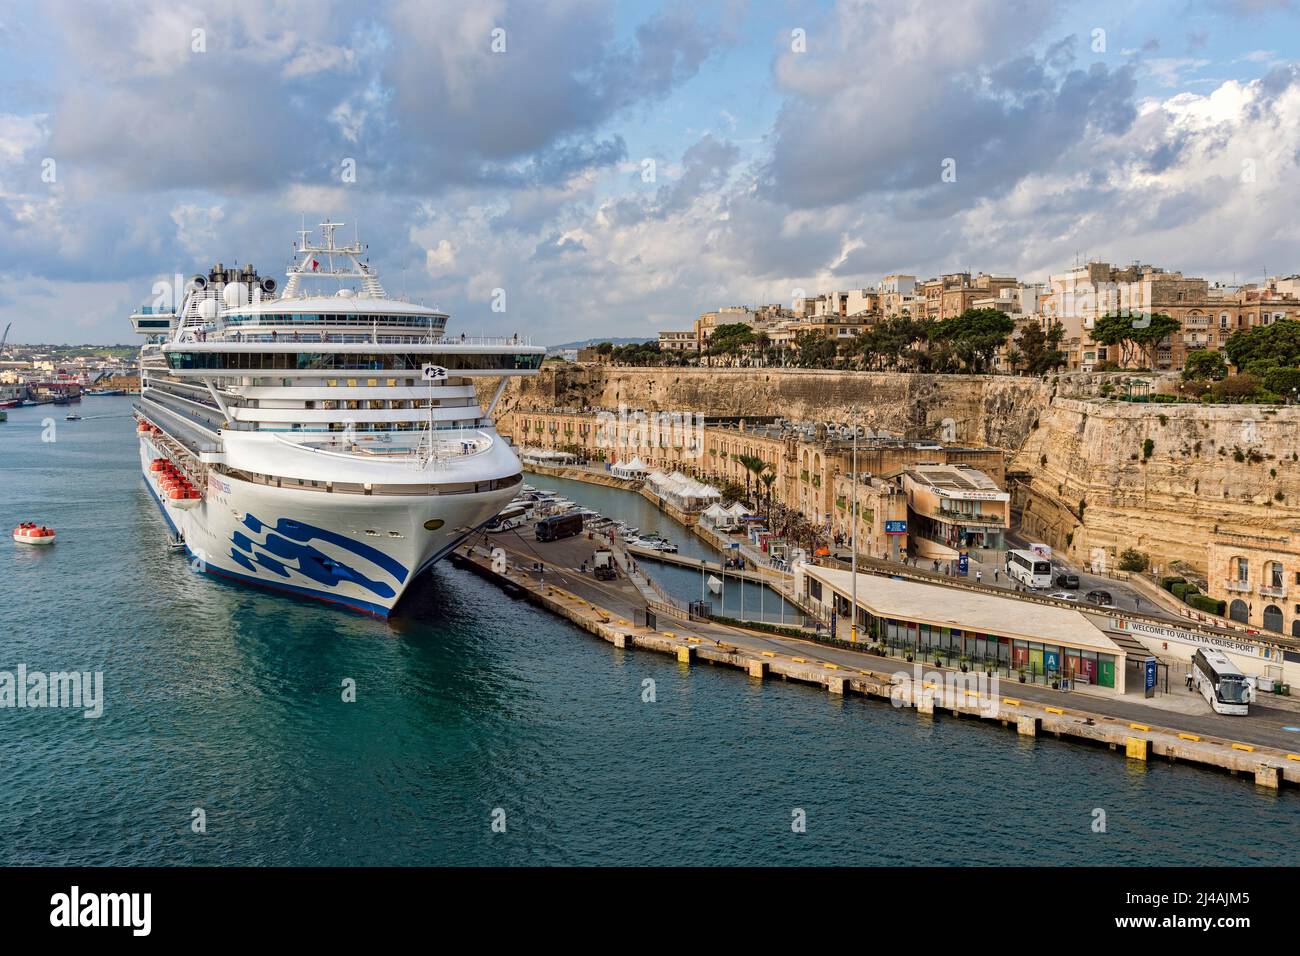 Sapphire Princess (Princess Cruises) alongside the Grand Harbour at Valetta, Malta - November 2018. Stock Photo